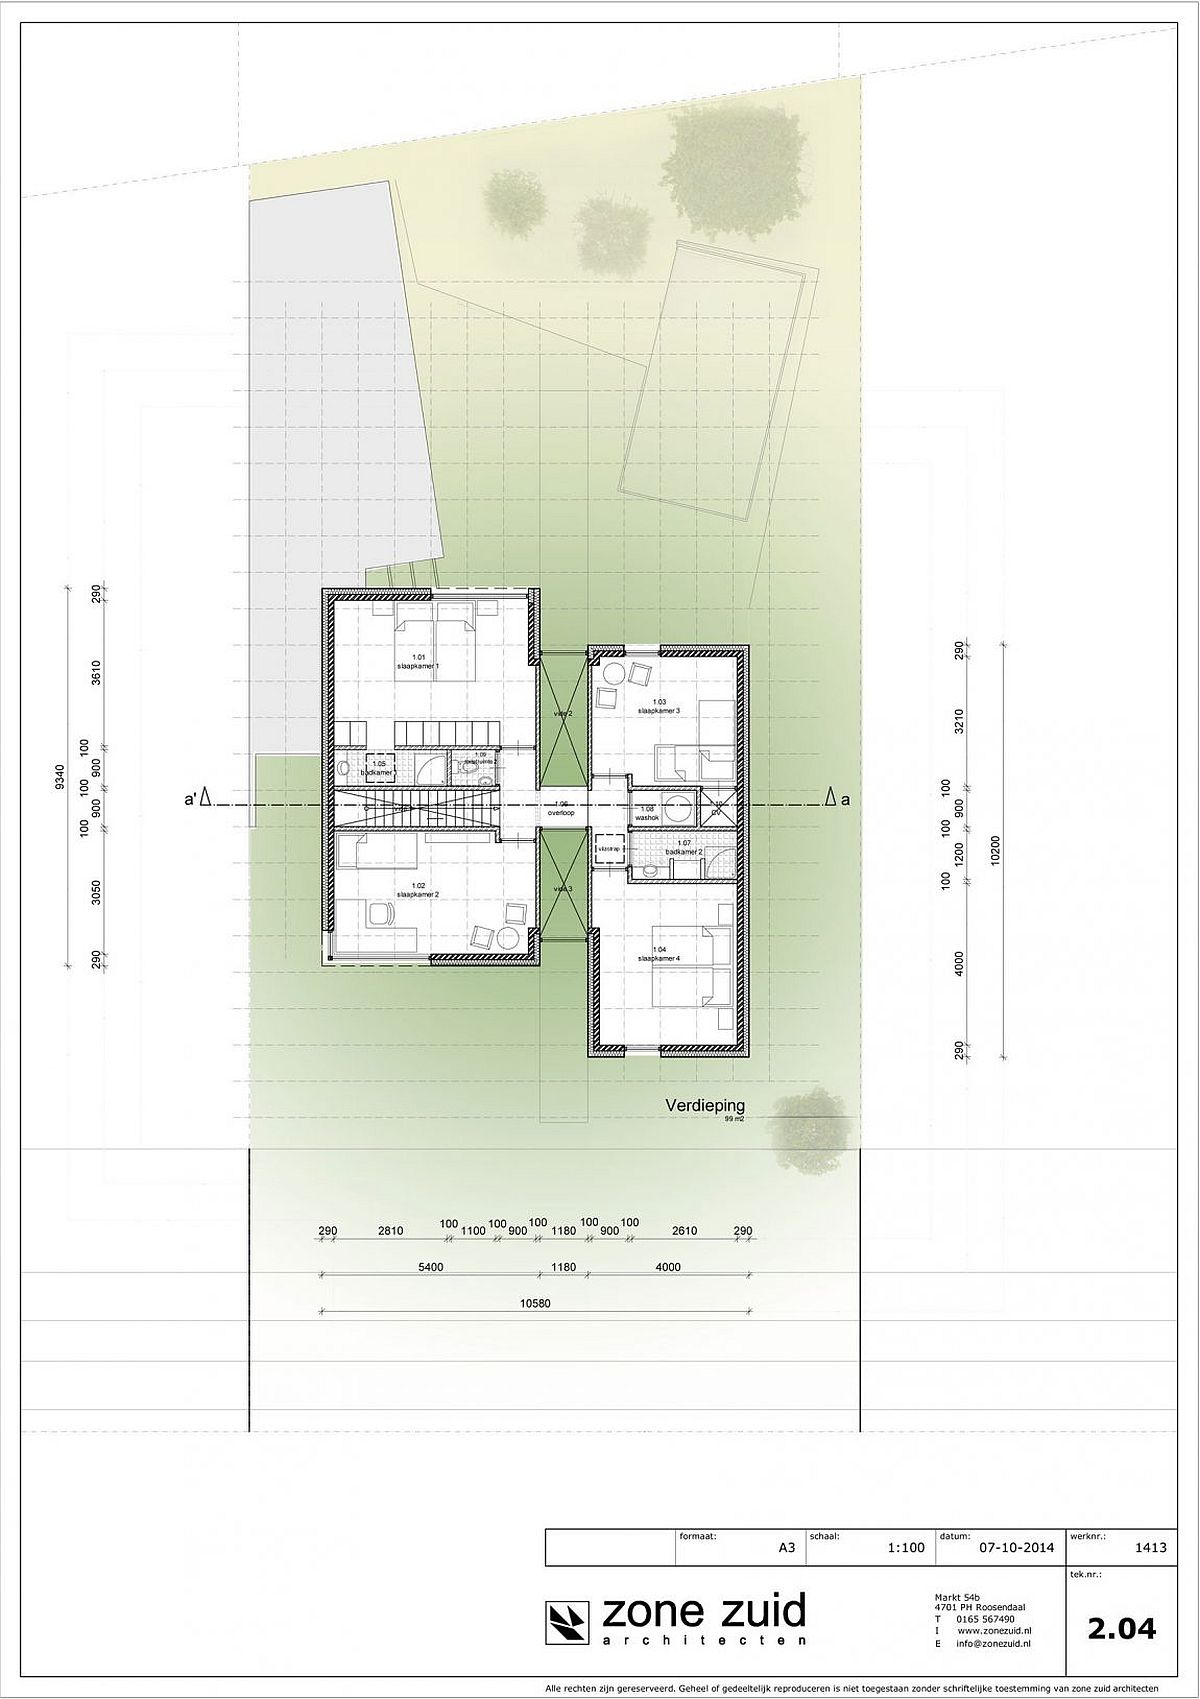 Floor plan of second level of House Daasdonklaan